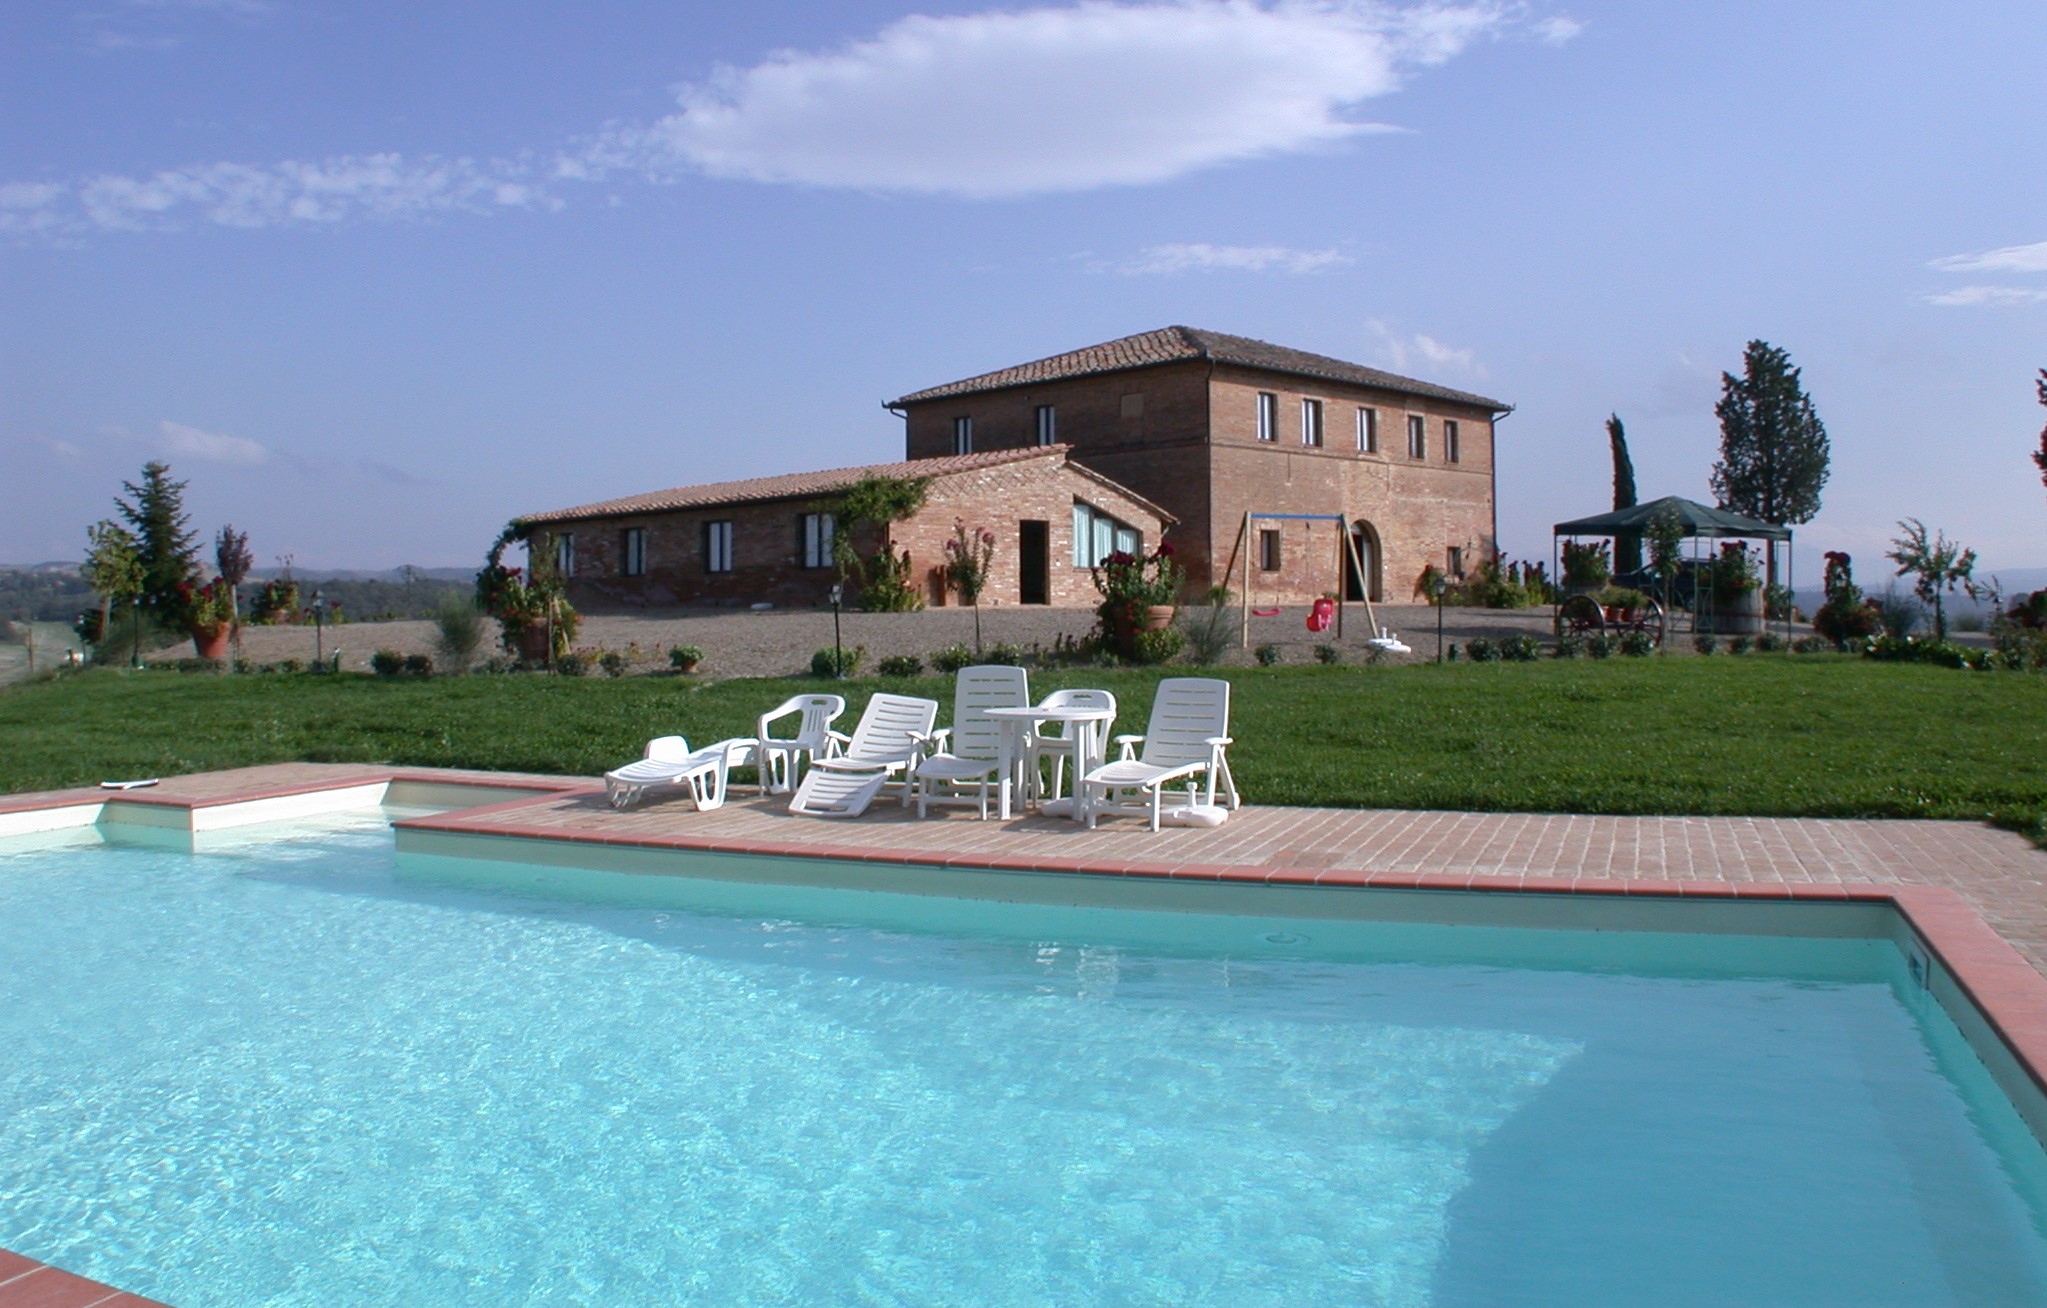 63_Agriturismo, vakantiehuis met zwembad, Toscane, Siena, Buonconvento, San Lorenzo, Italië, 29